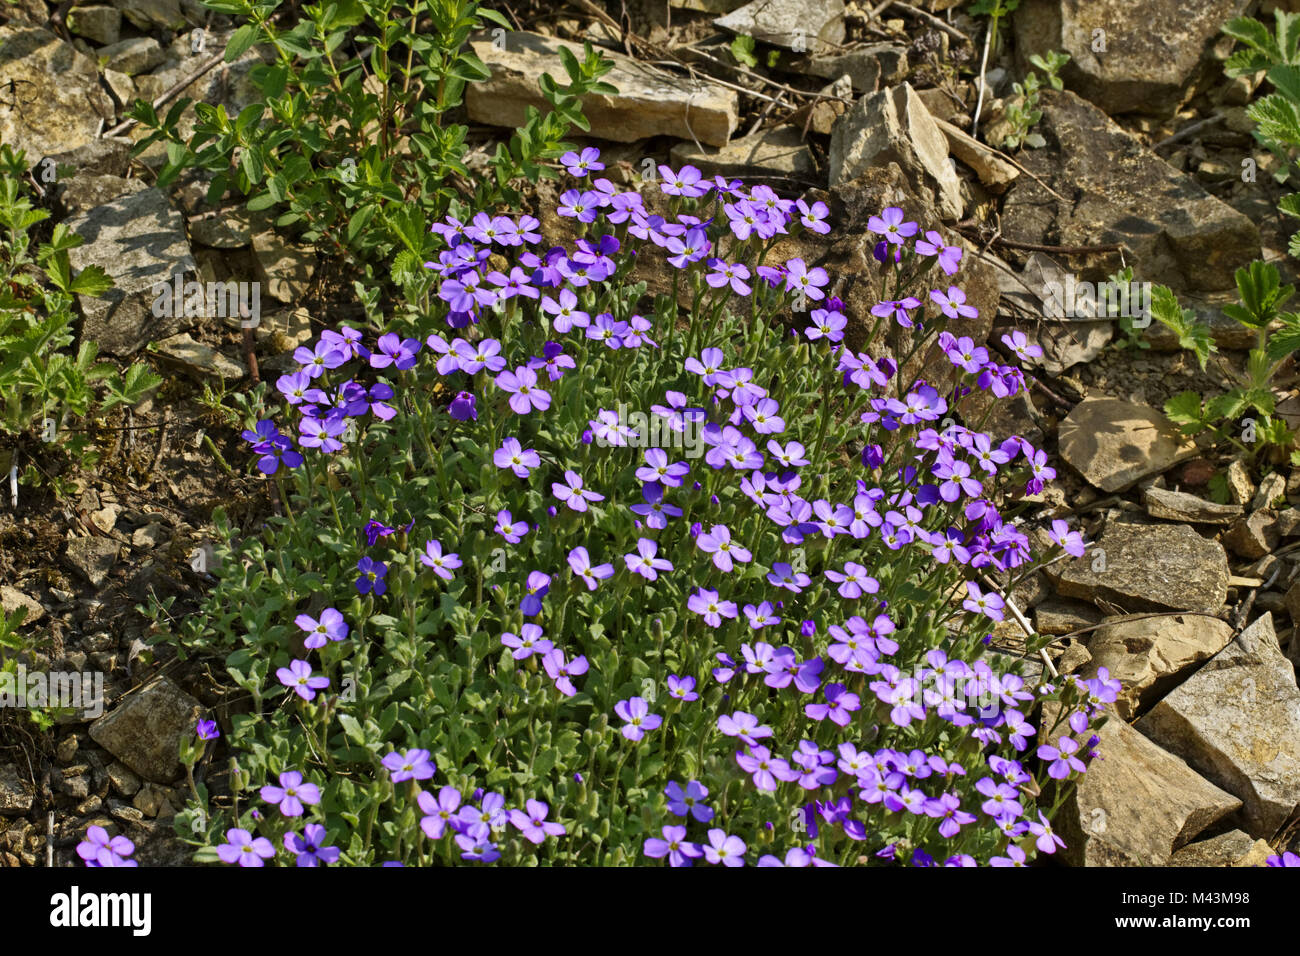 Aubrieta intermedia, Aubrieta, Aubretia, Lilacbush Stock Photo